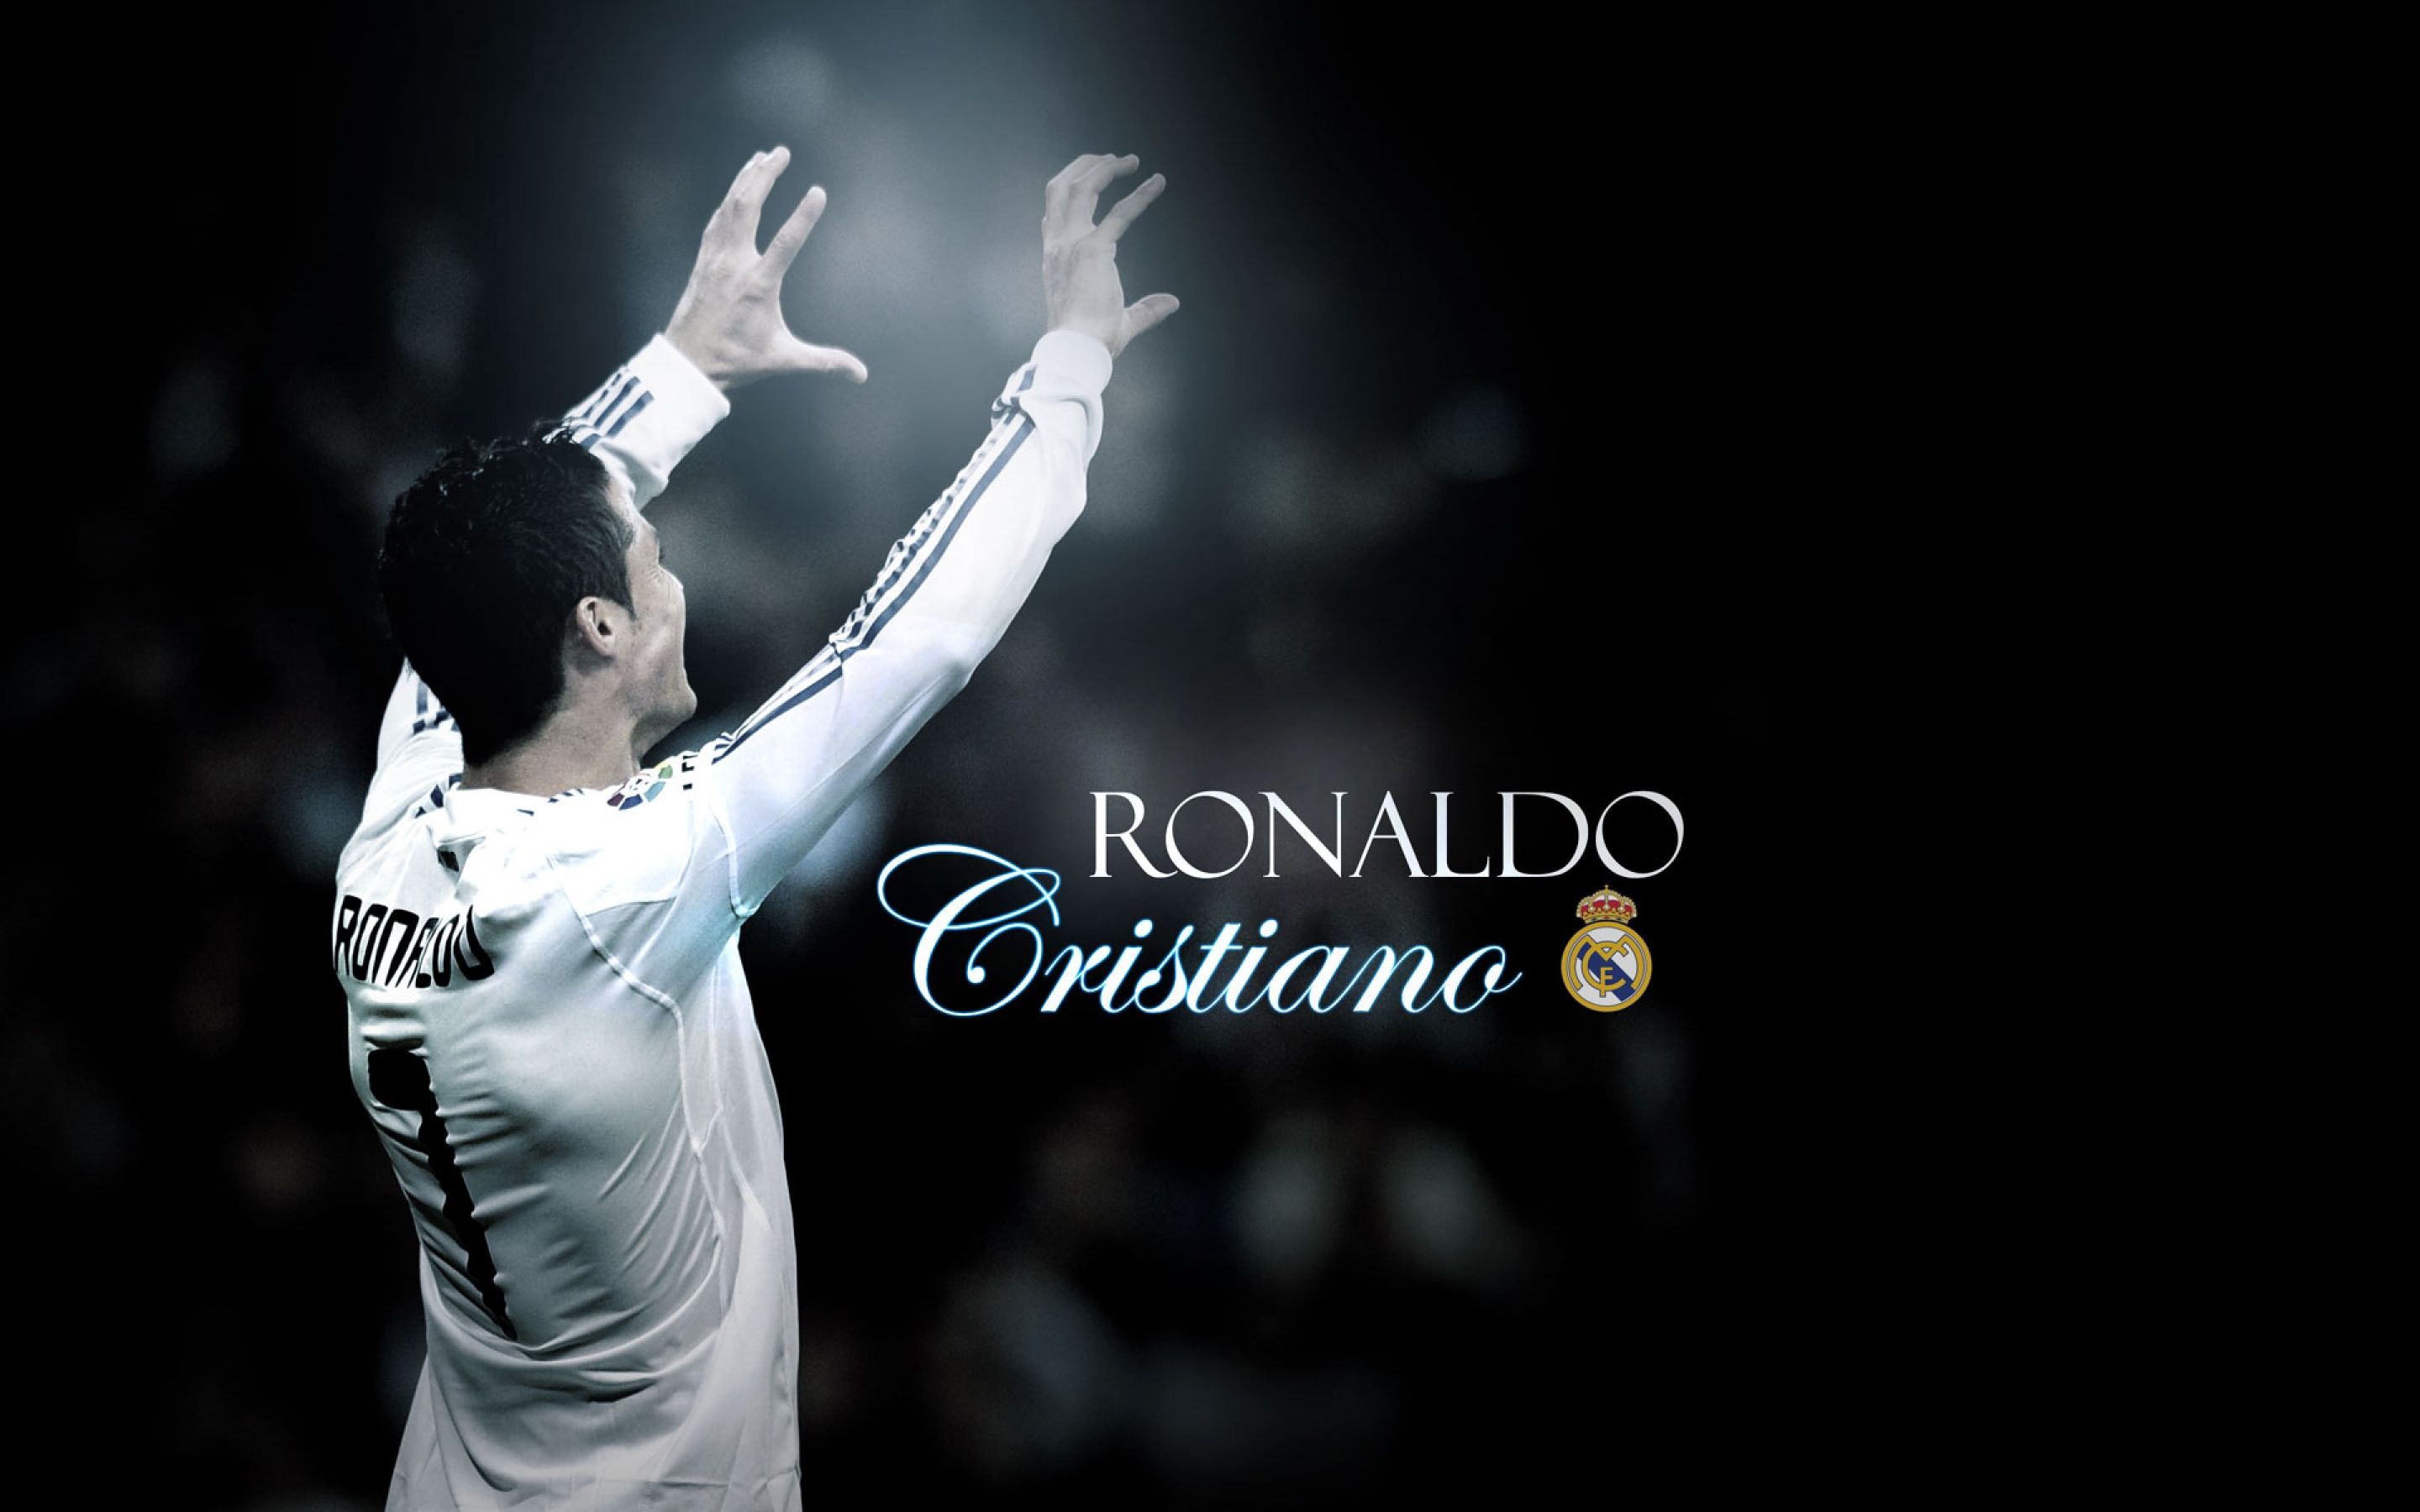 Cristiano Ronaldo Football Wallpaper